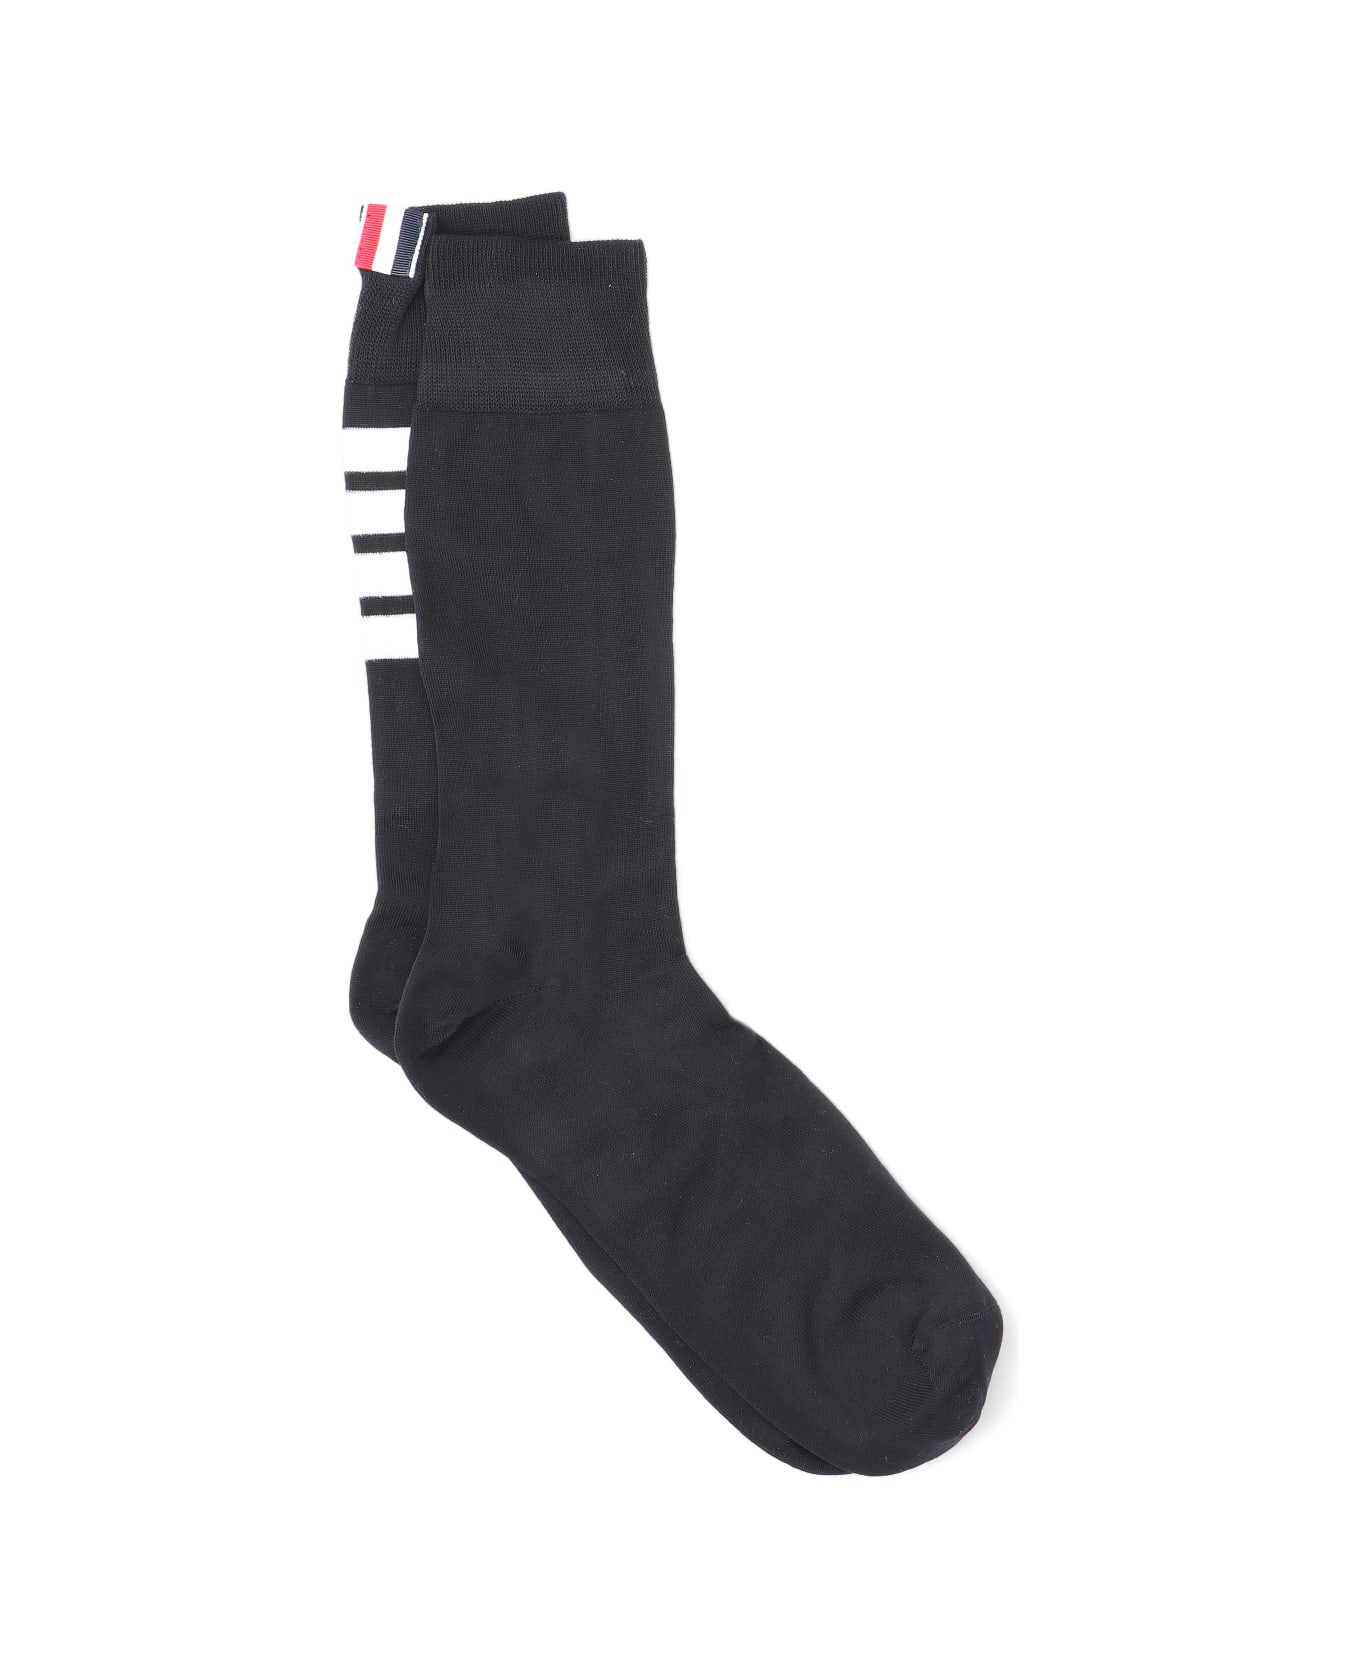 Thom Browne '4-bar' Socks - Black  